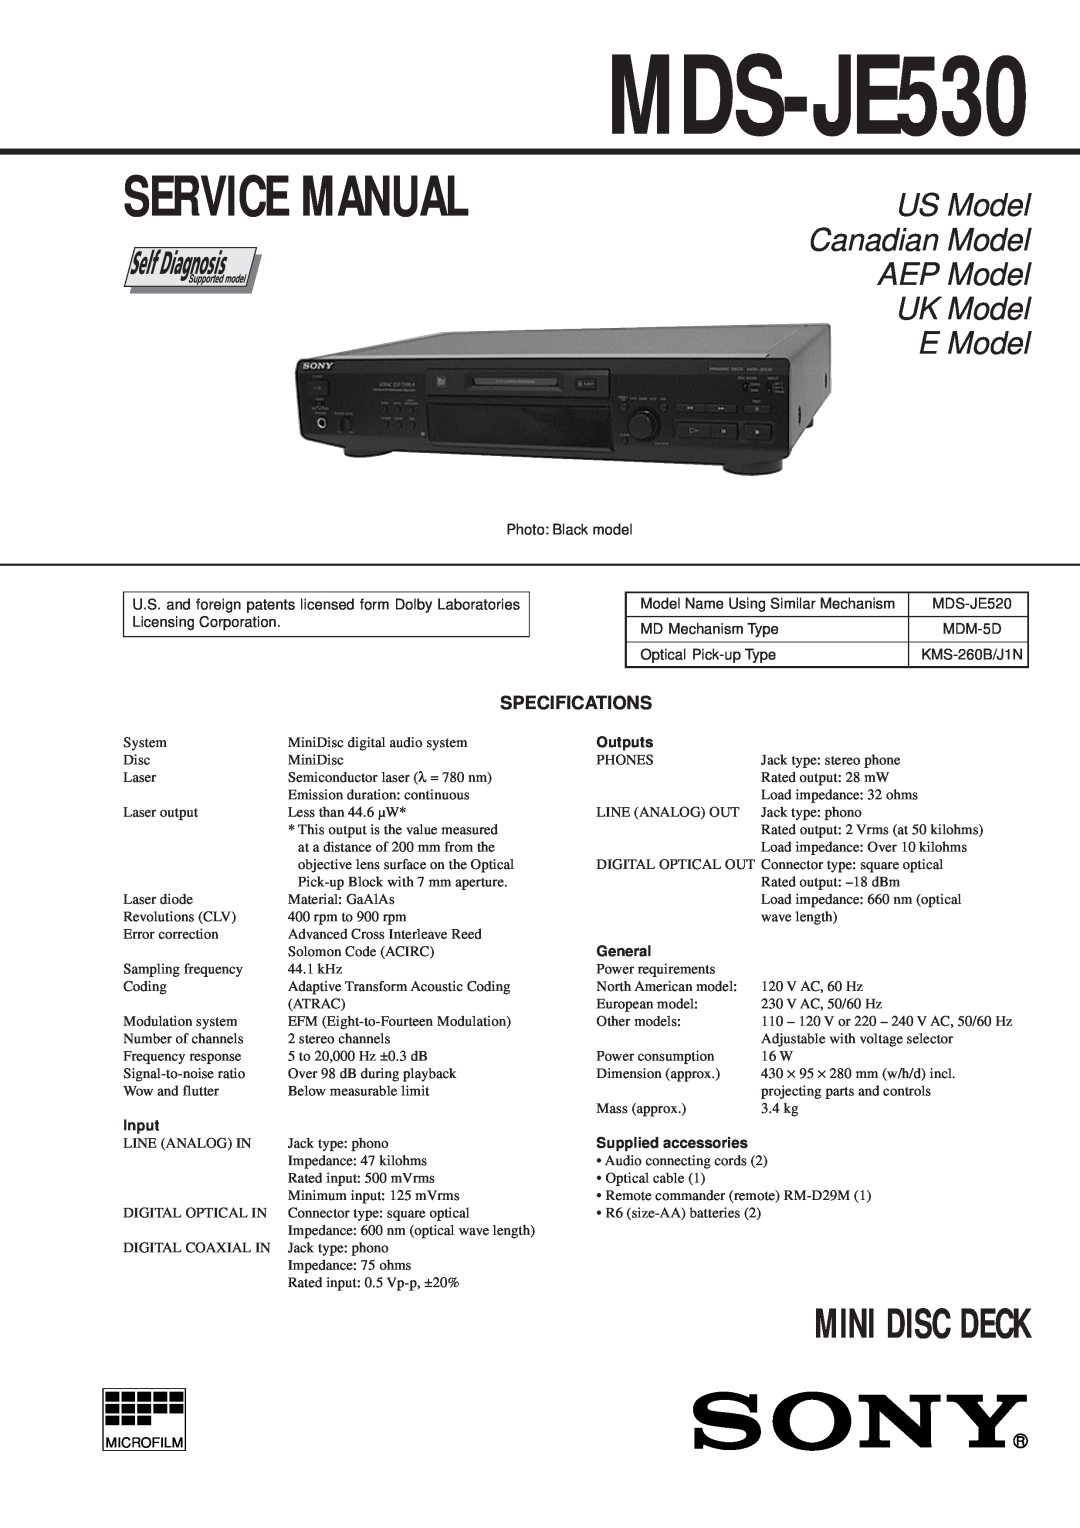 Sony MDS-JE530 service manual Specifications, Service Manual, Mini Disc Deck, US Model Canadian Model AEP Model UK Model 